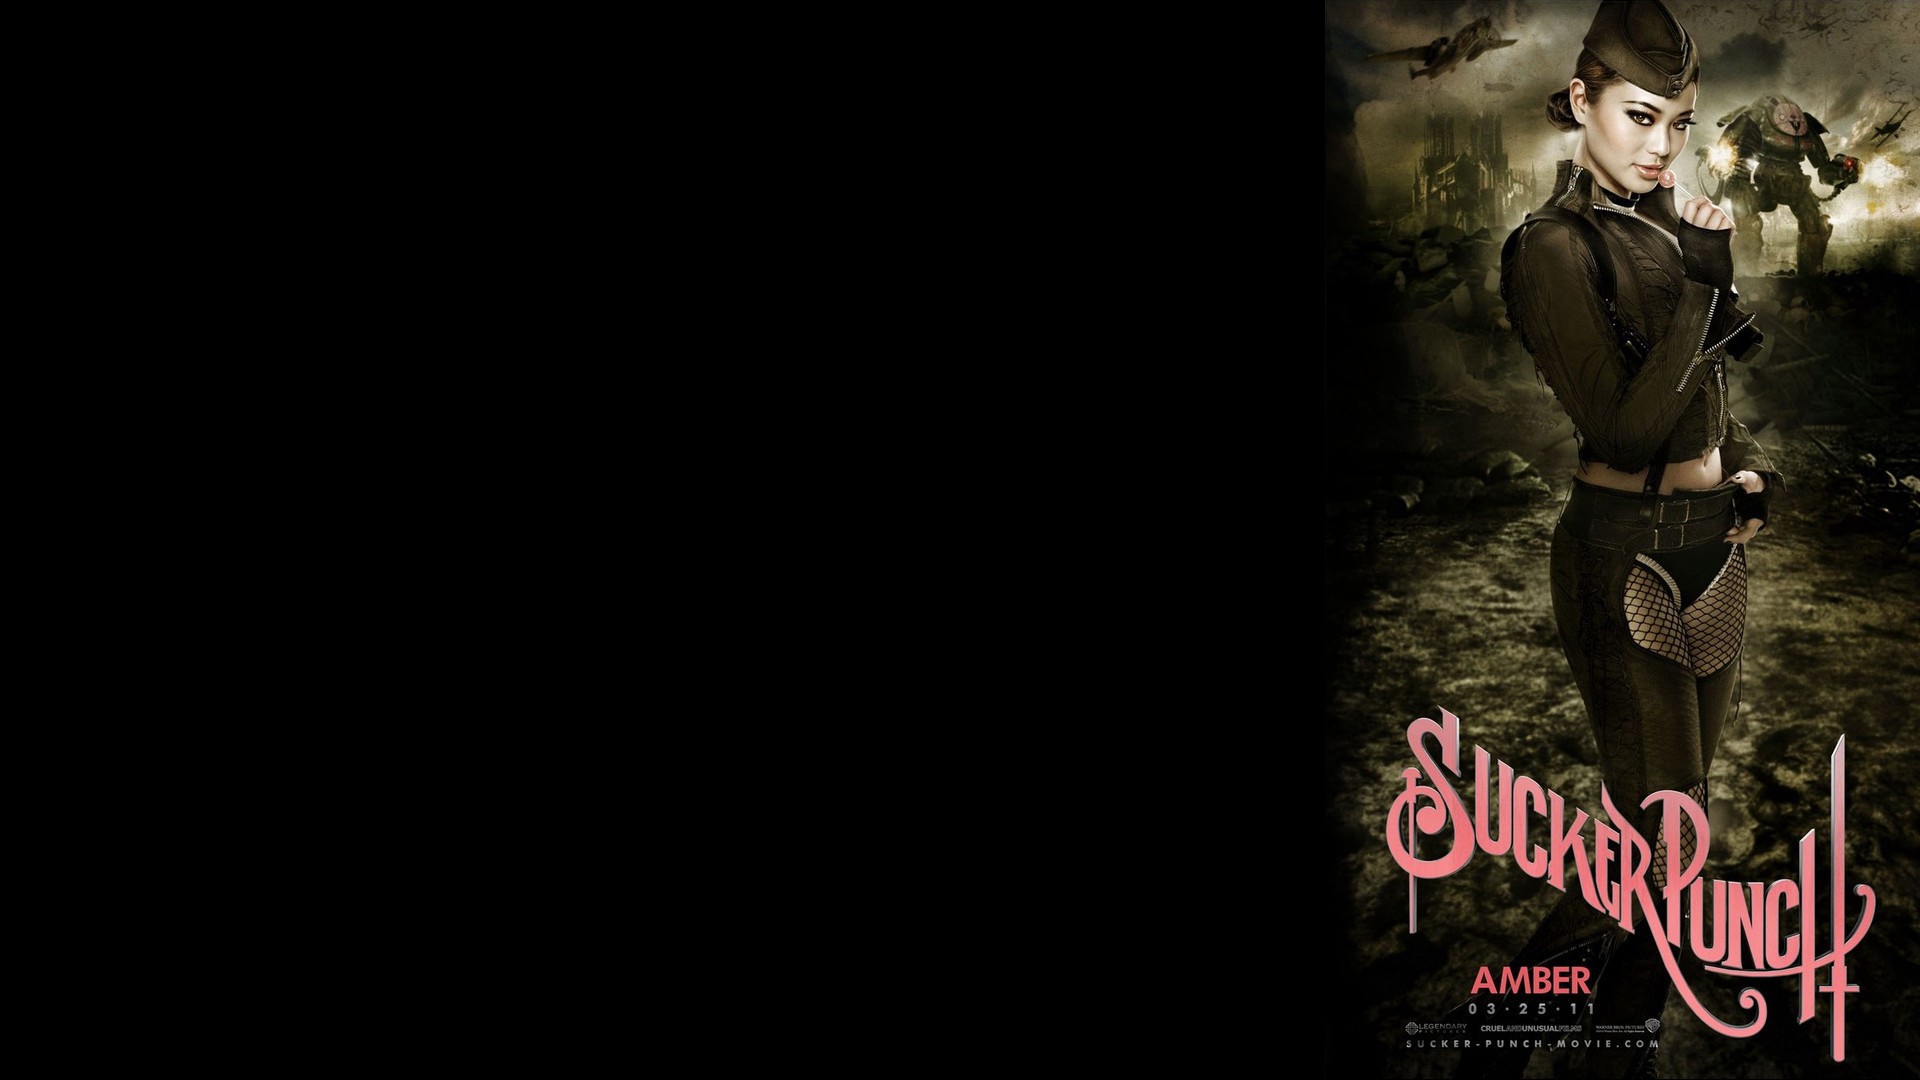 Sucker Punch, movie posters, Jamie Chung, black background - desktop wallpaper